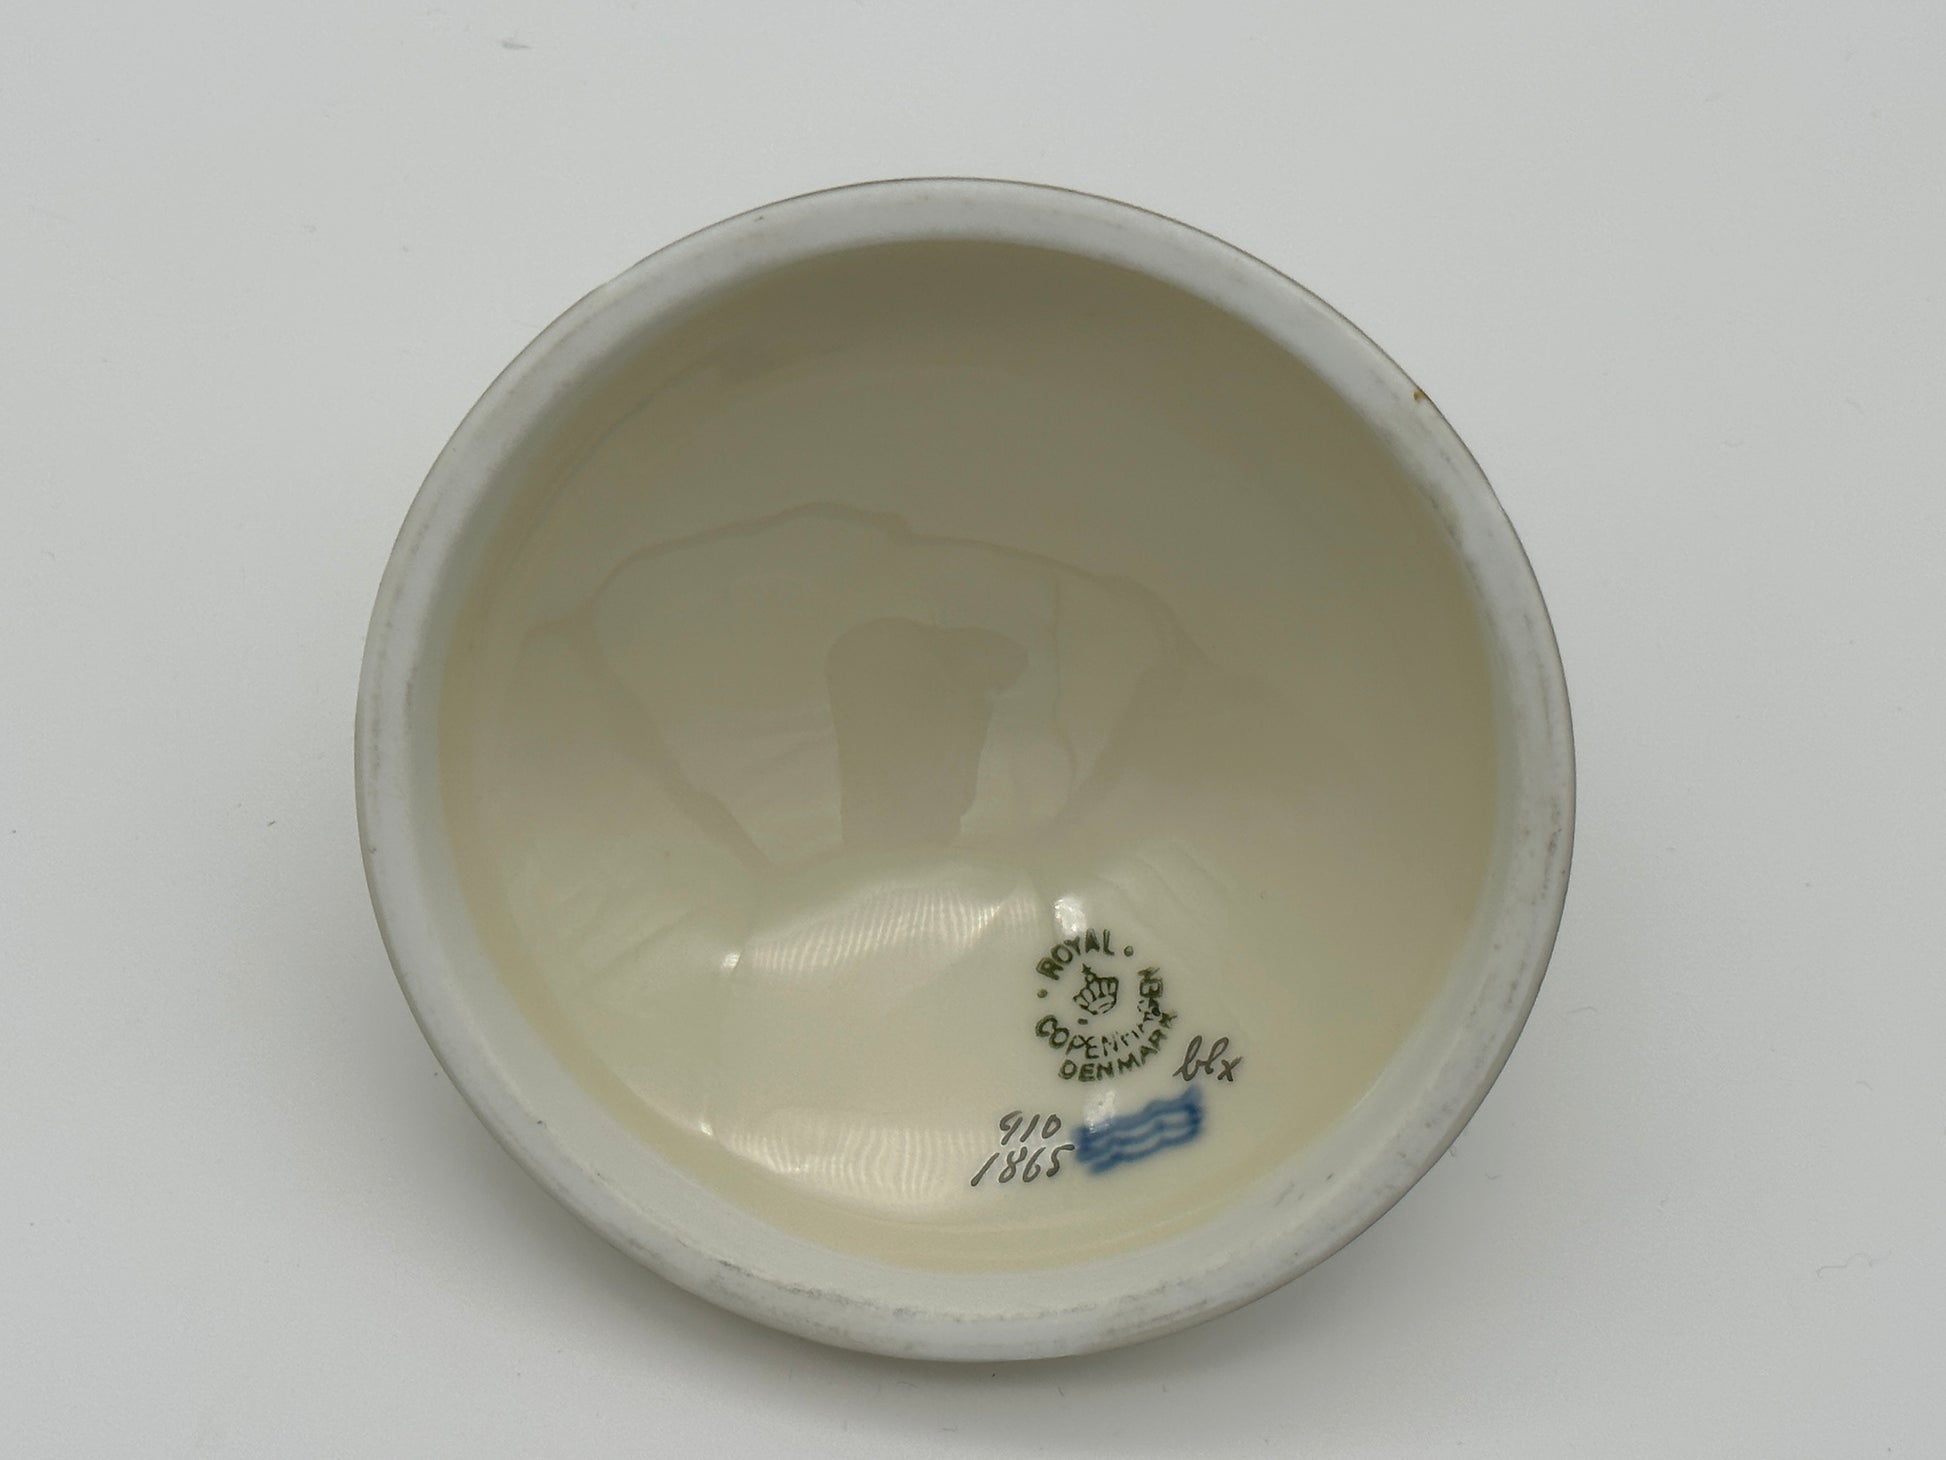 Royal Copenhagen - Frijsenborg - Sugar bowl - No 1865 - 1953 Scandinapan